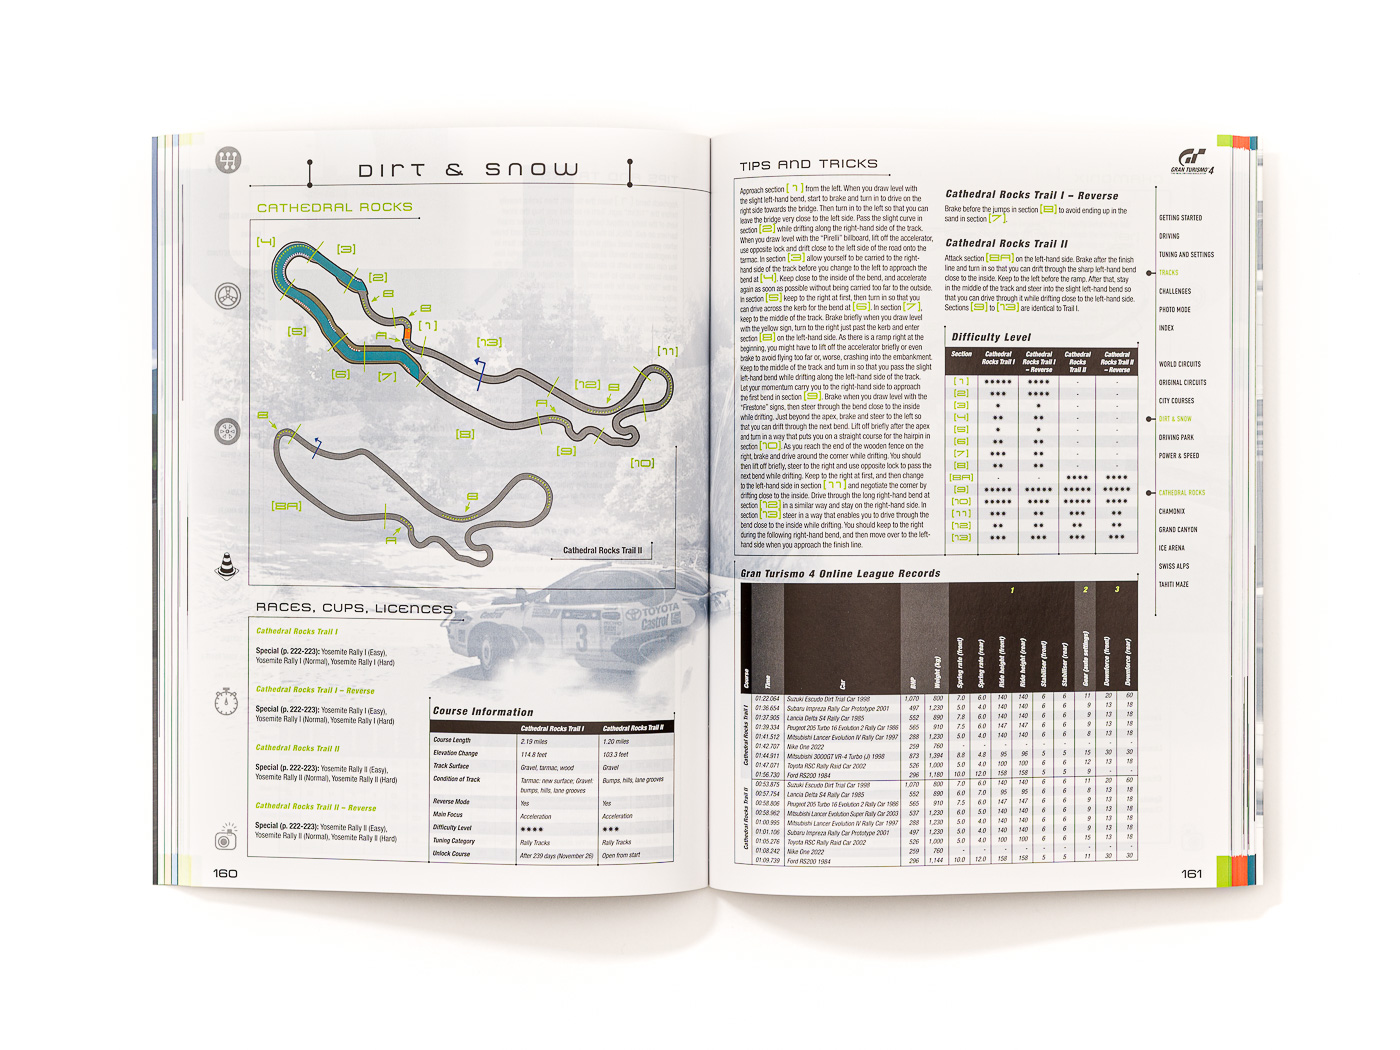 Gran Turismo™ 7 Online Manual 